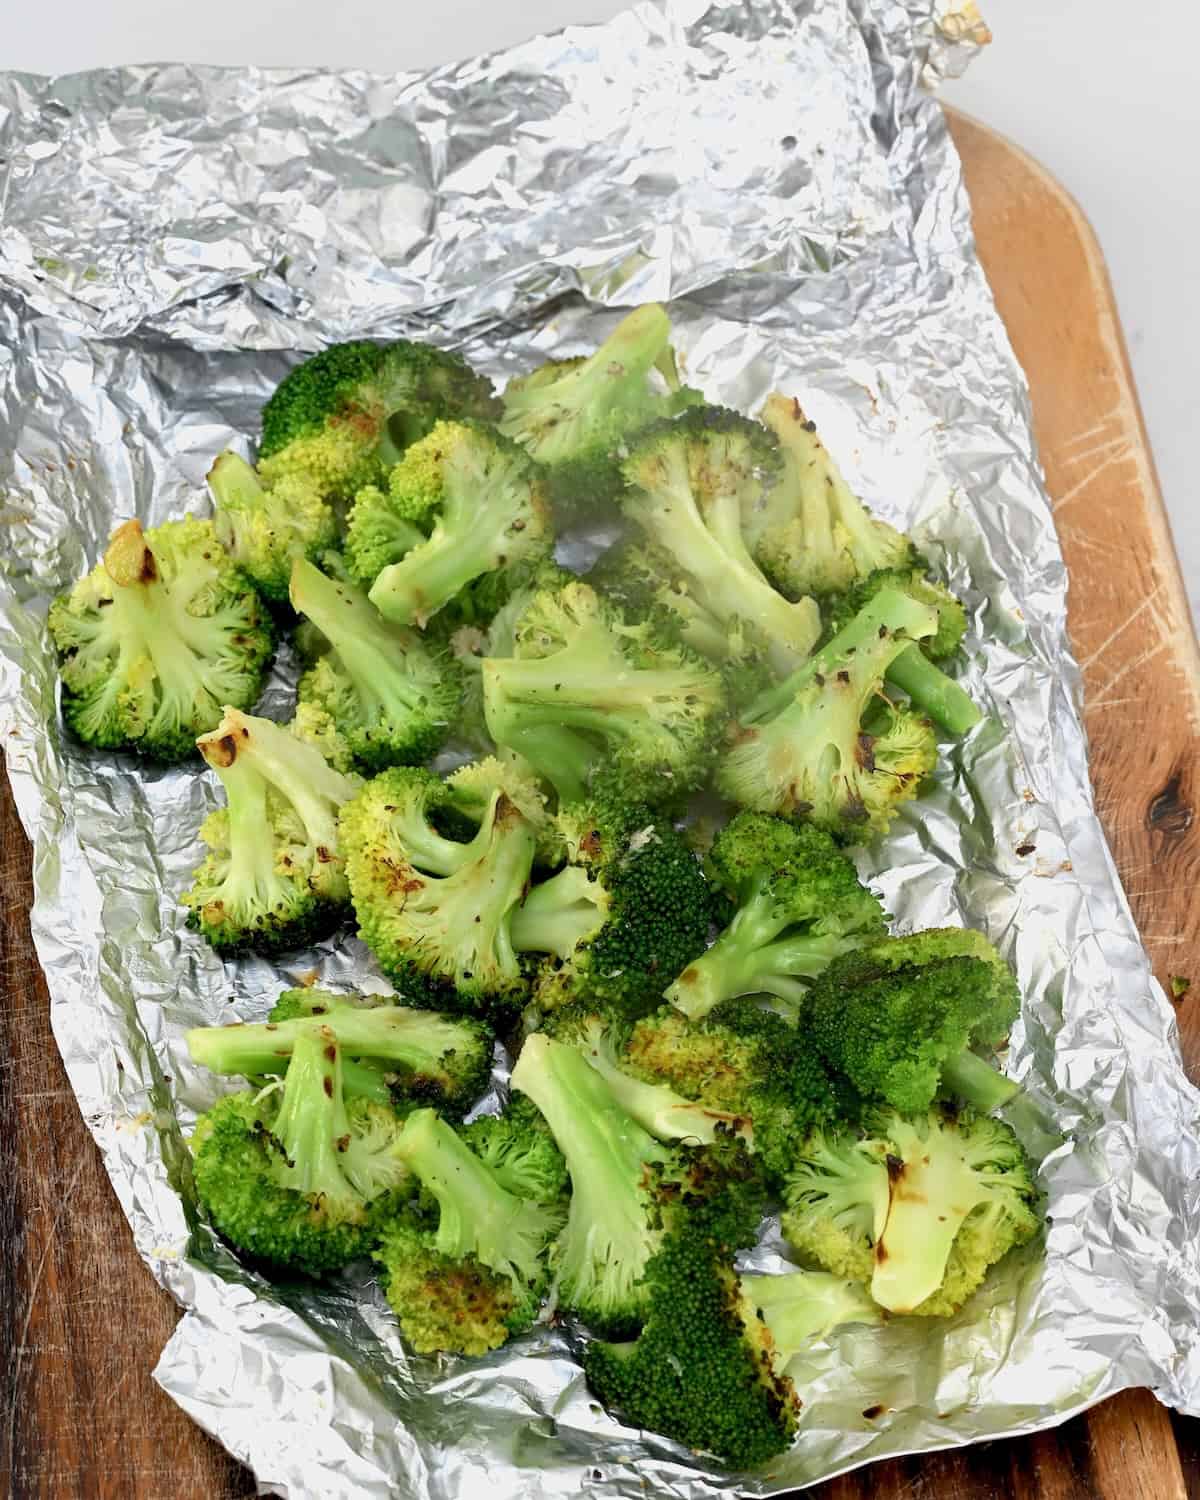 Freshly grilled broccoli in foil